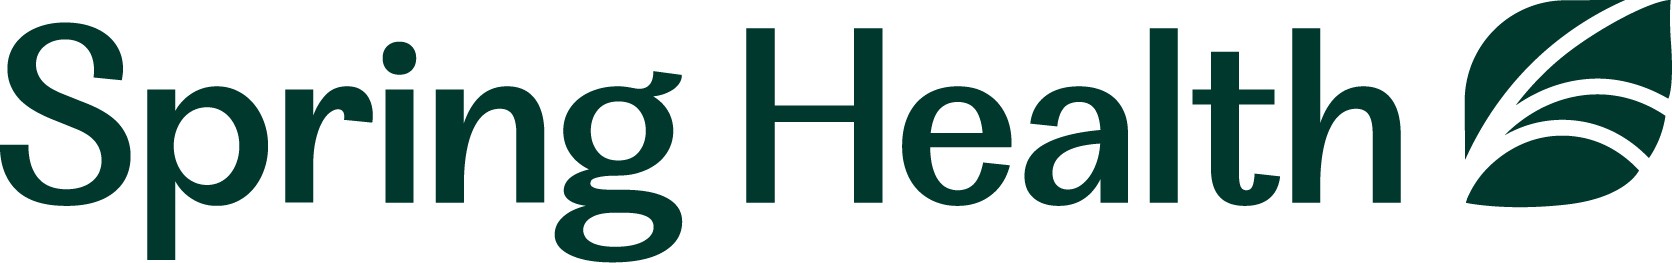 SH23 Full logo (winter green)